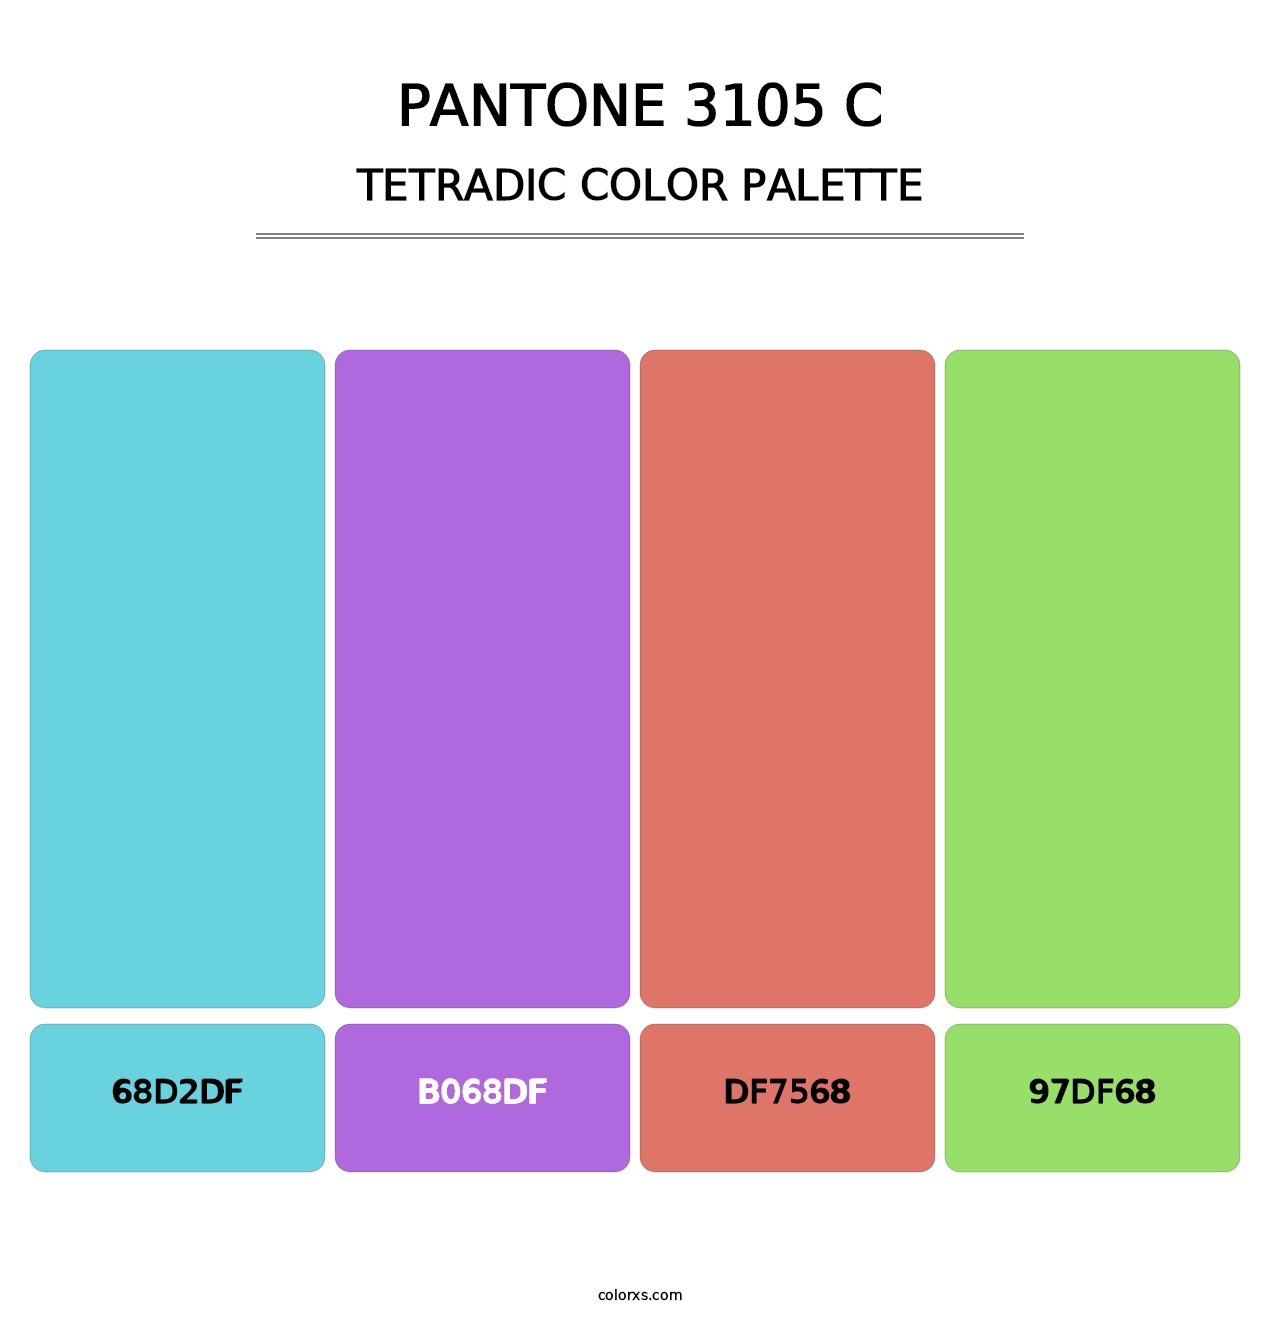 PANTONE 3105 C - Tetradic Color Palette